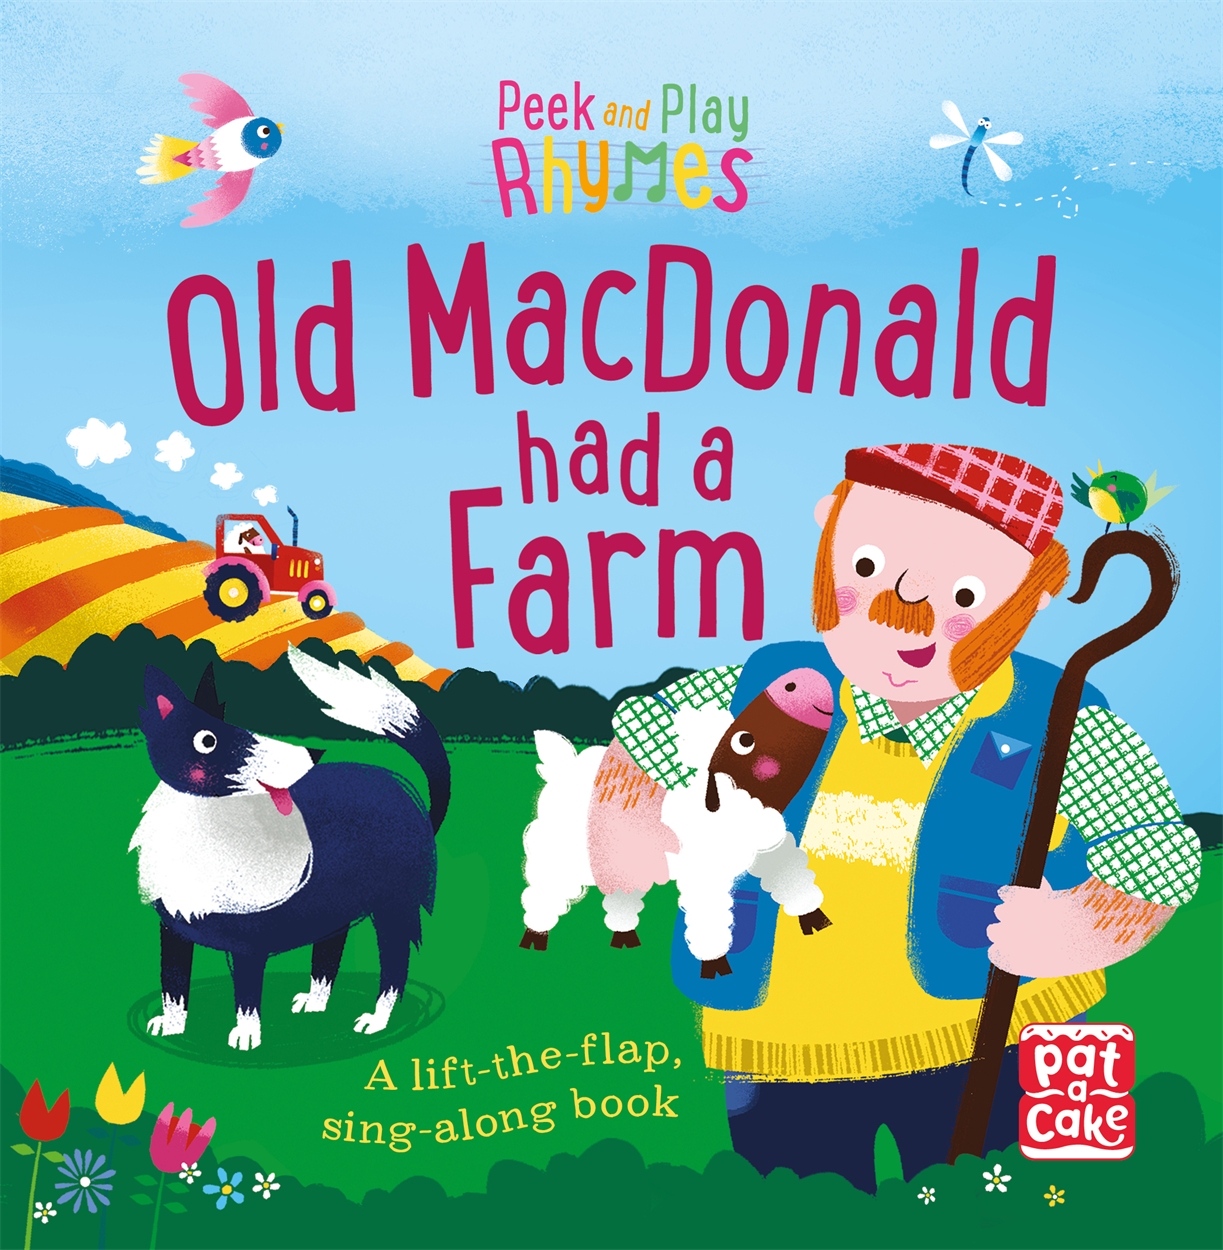 Peek and Play Rhymes: Old Macdonald had a Farm by Richard Merritt |  Hachette UK